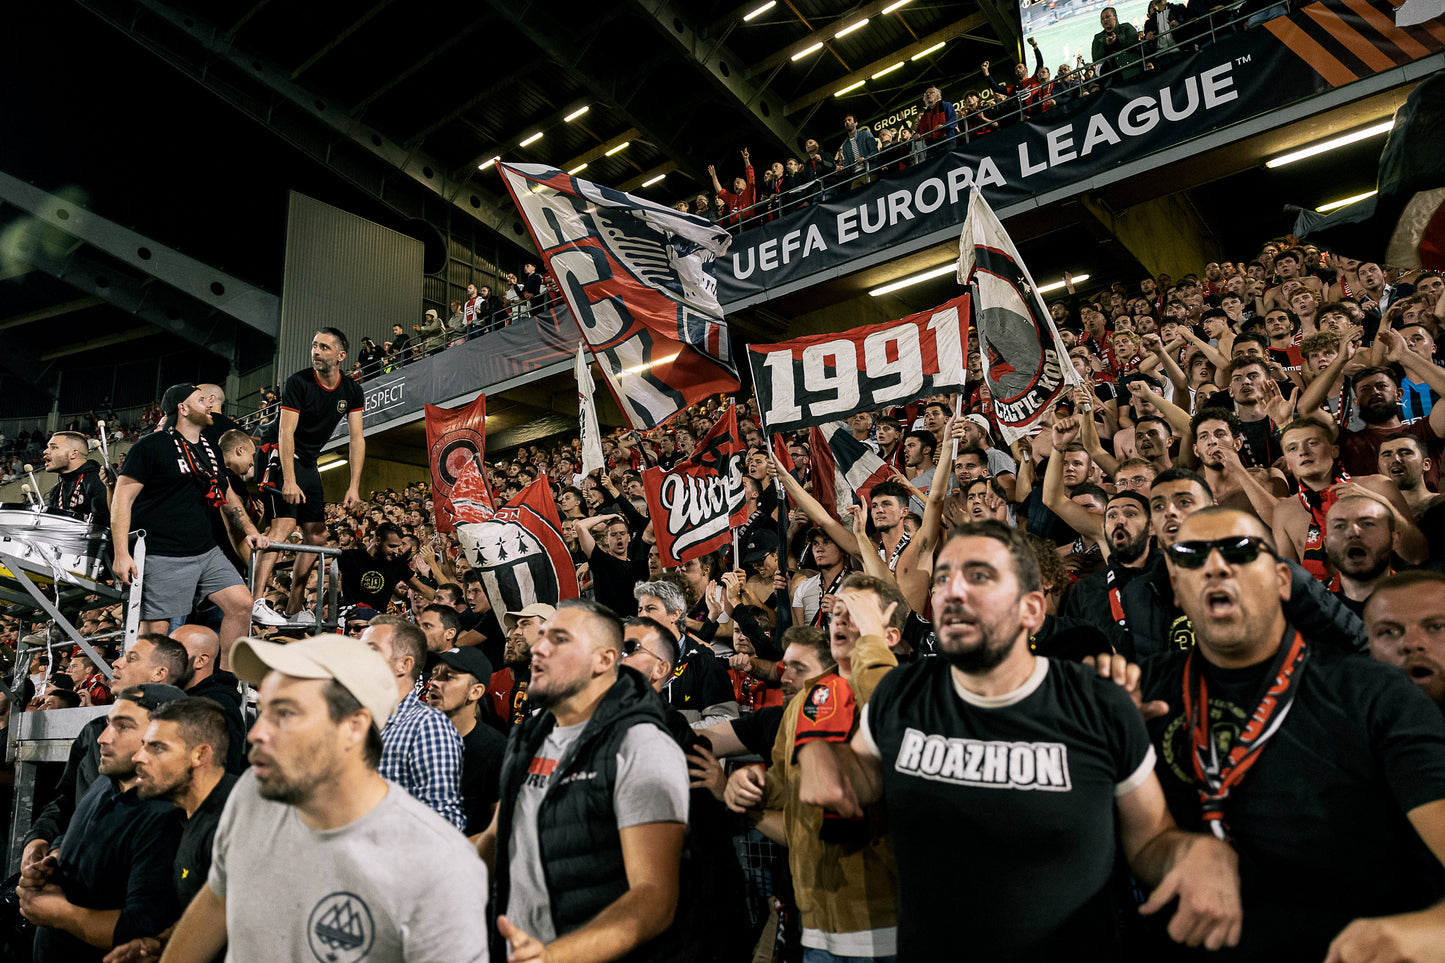 OFFRE DERNIERE MINUTE / Voyage supporters SRFC Europa League - AC Milan